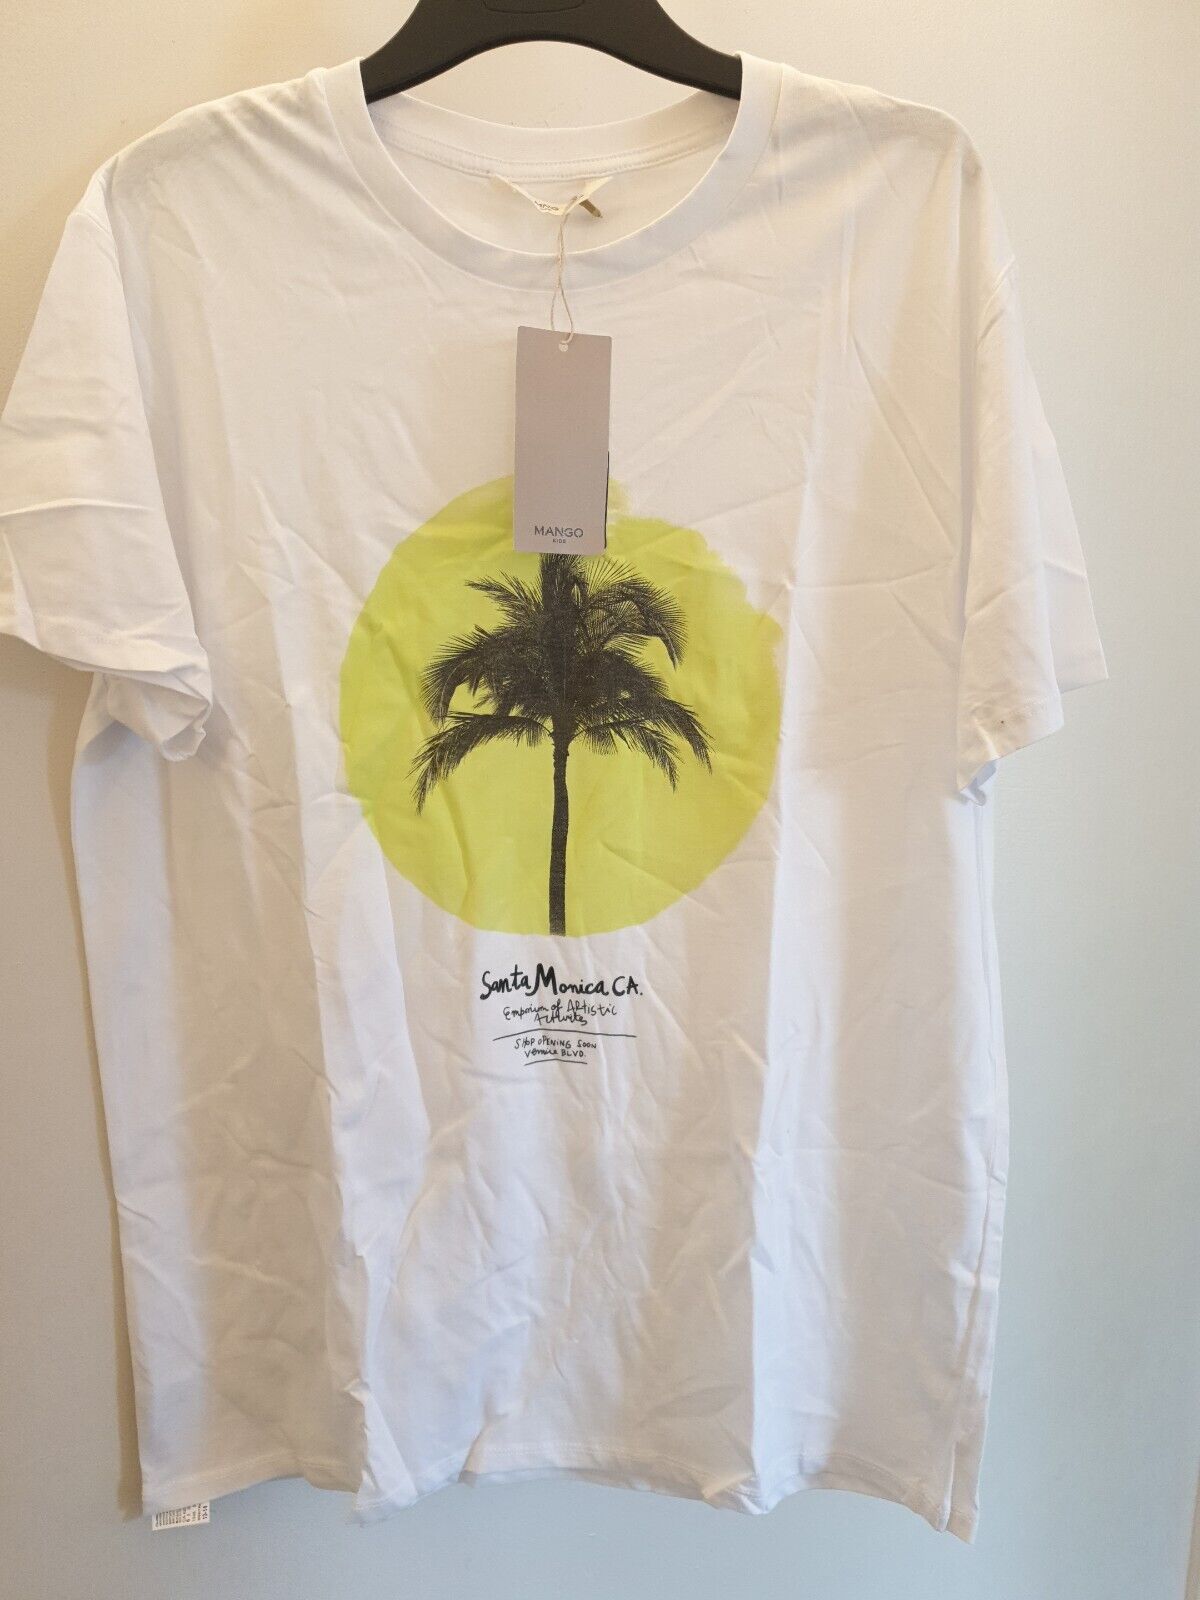 MNG White Tshirt Santa Monica CA Size 13-14y Ref A 22